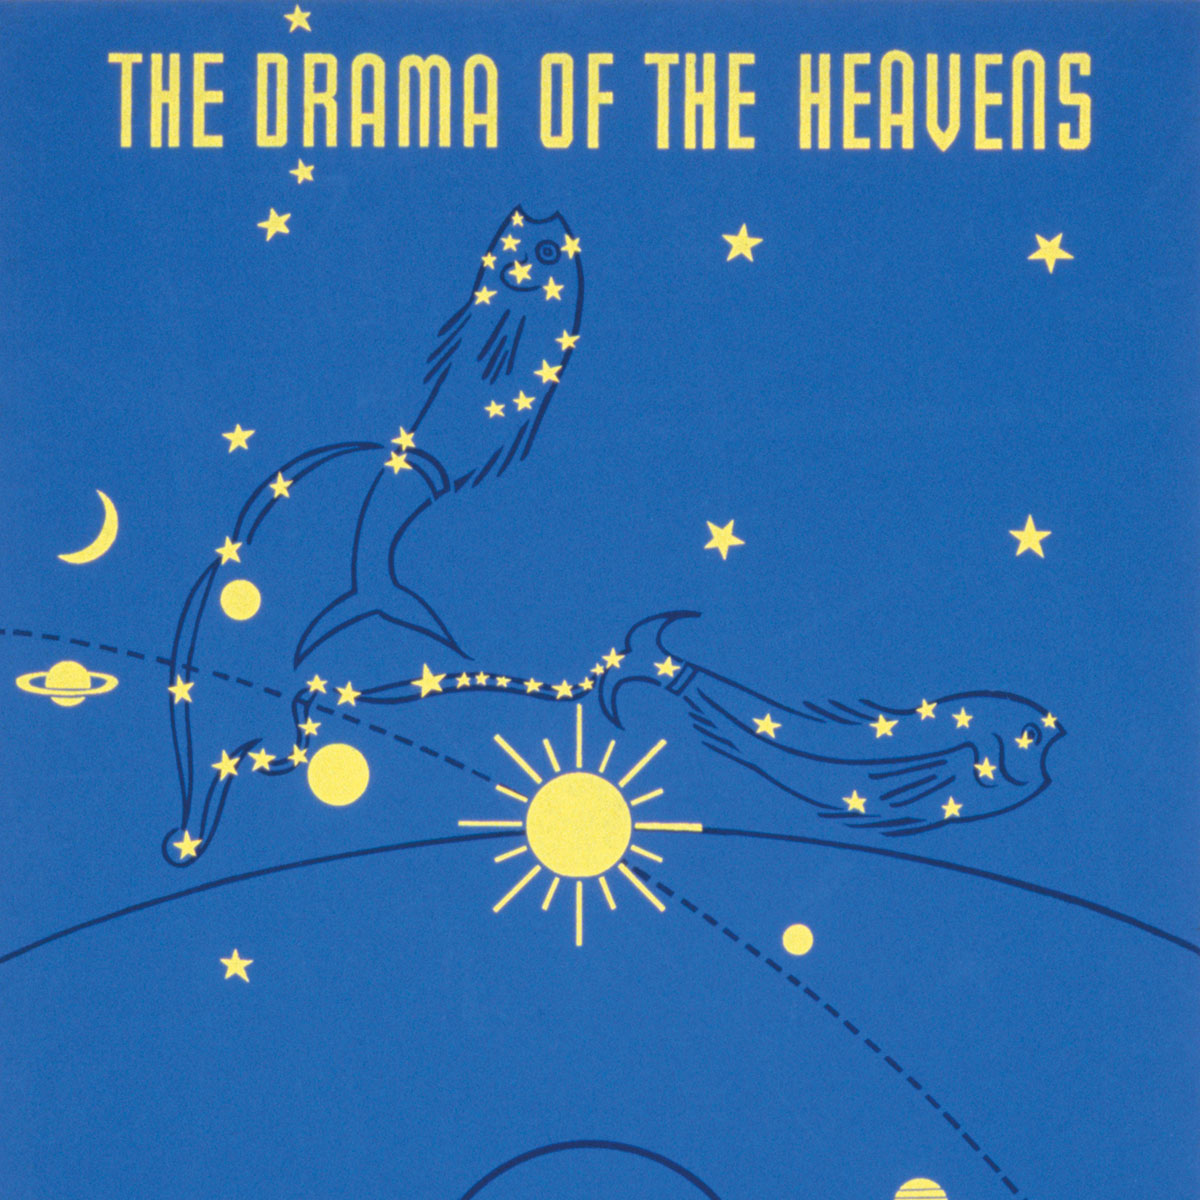 The drama of the heavens